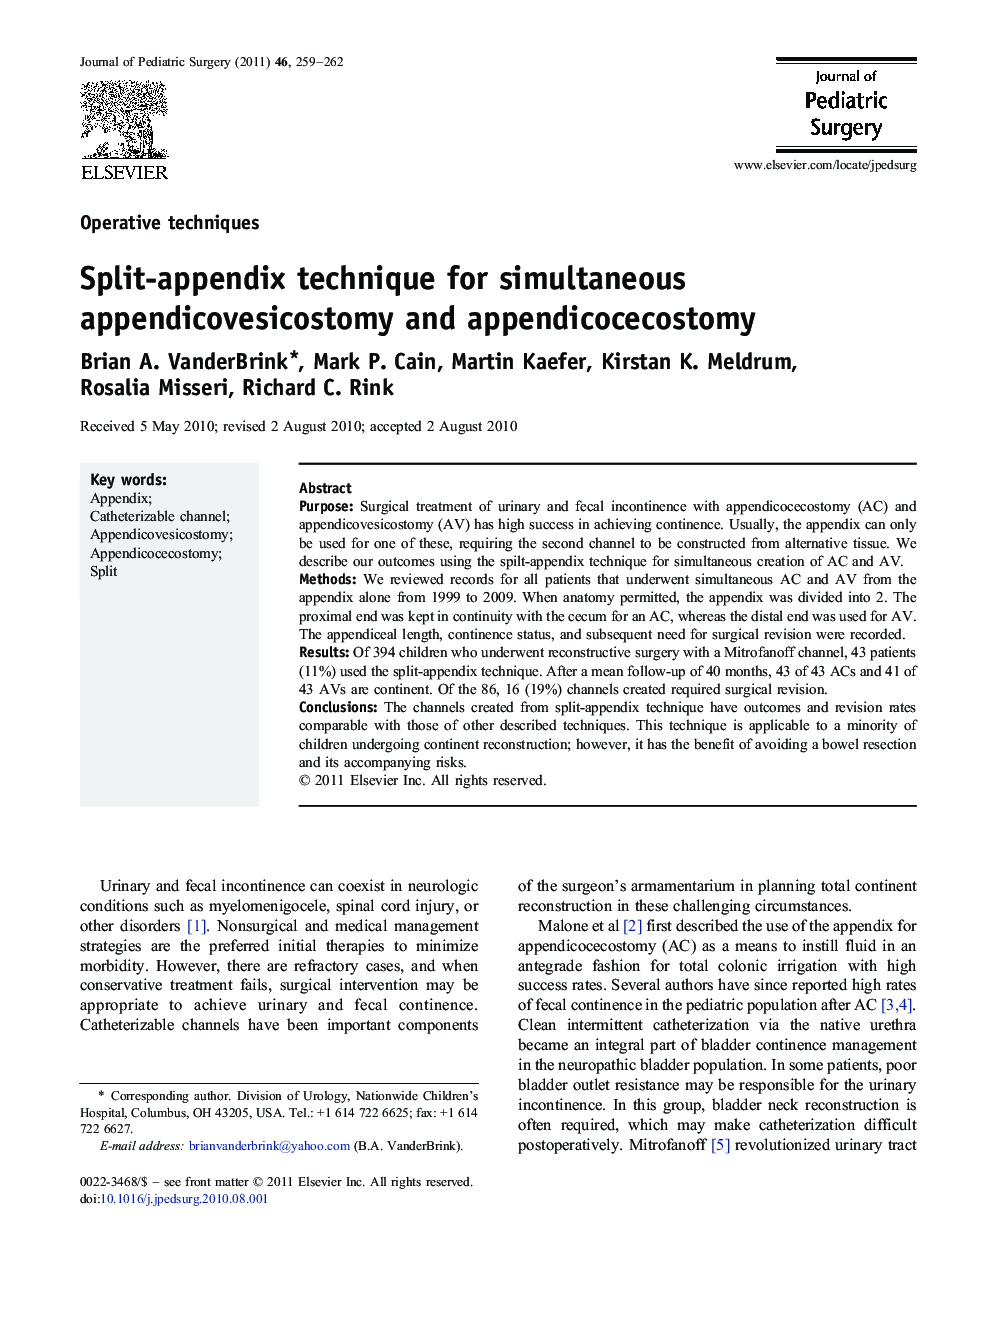 Split-appendix technique for simultaneous appendicovesicostomy and appendicocecostomy